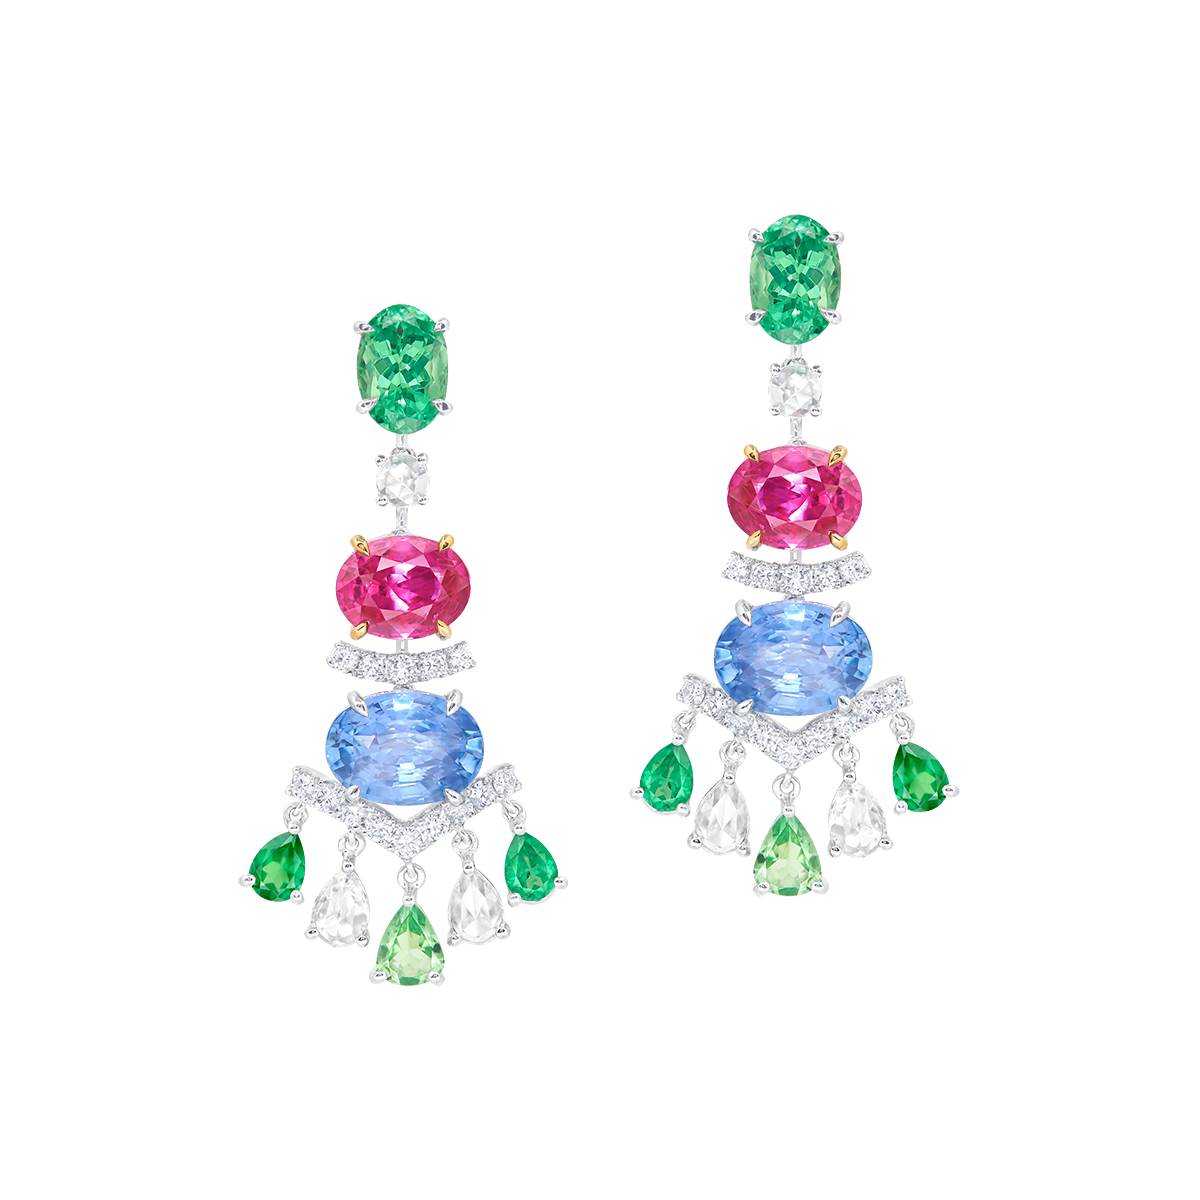 紅寶與藍寶鑽石吊燈耳環
Pair of Ruby, Sapphire and Diamond Chandelier Earrings